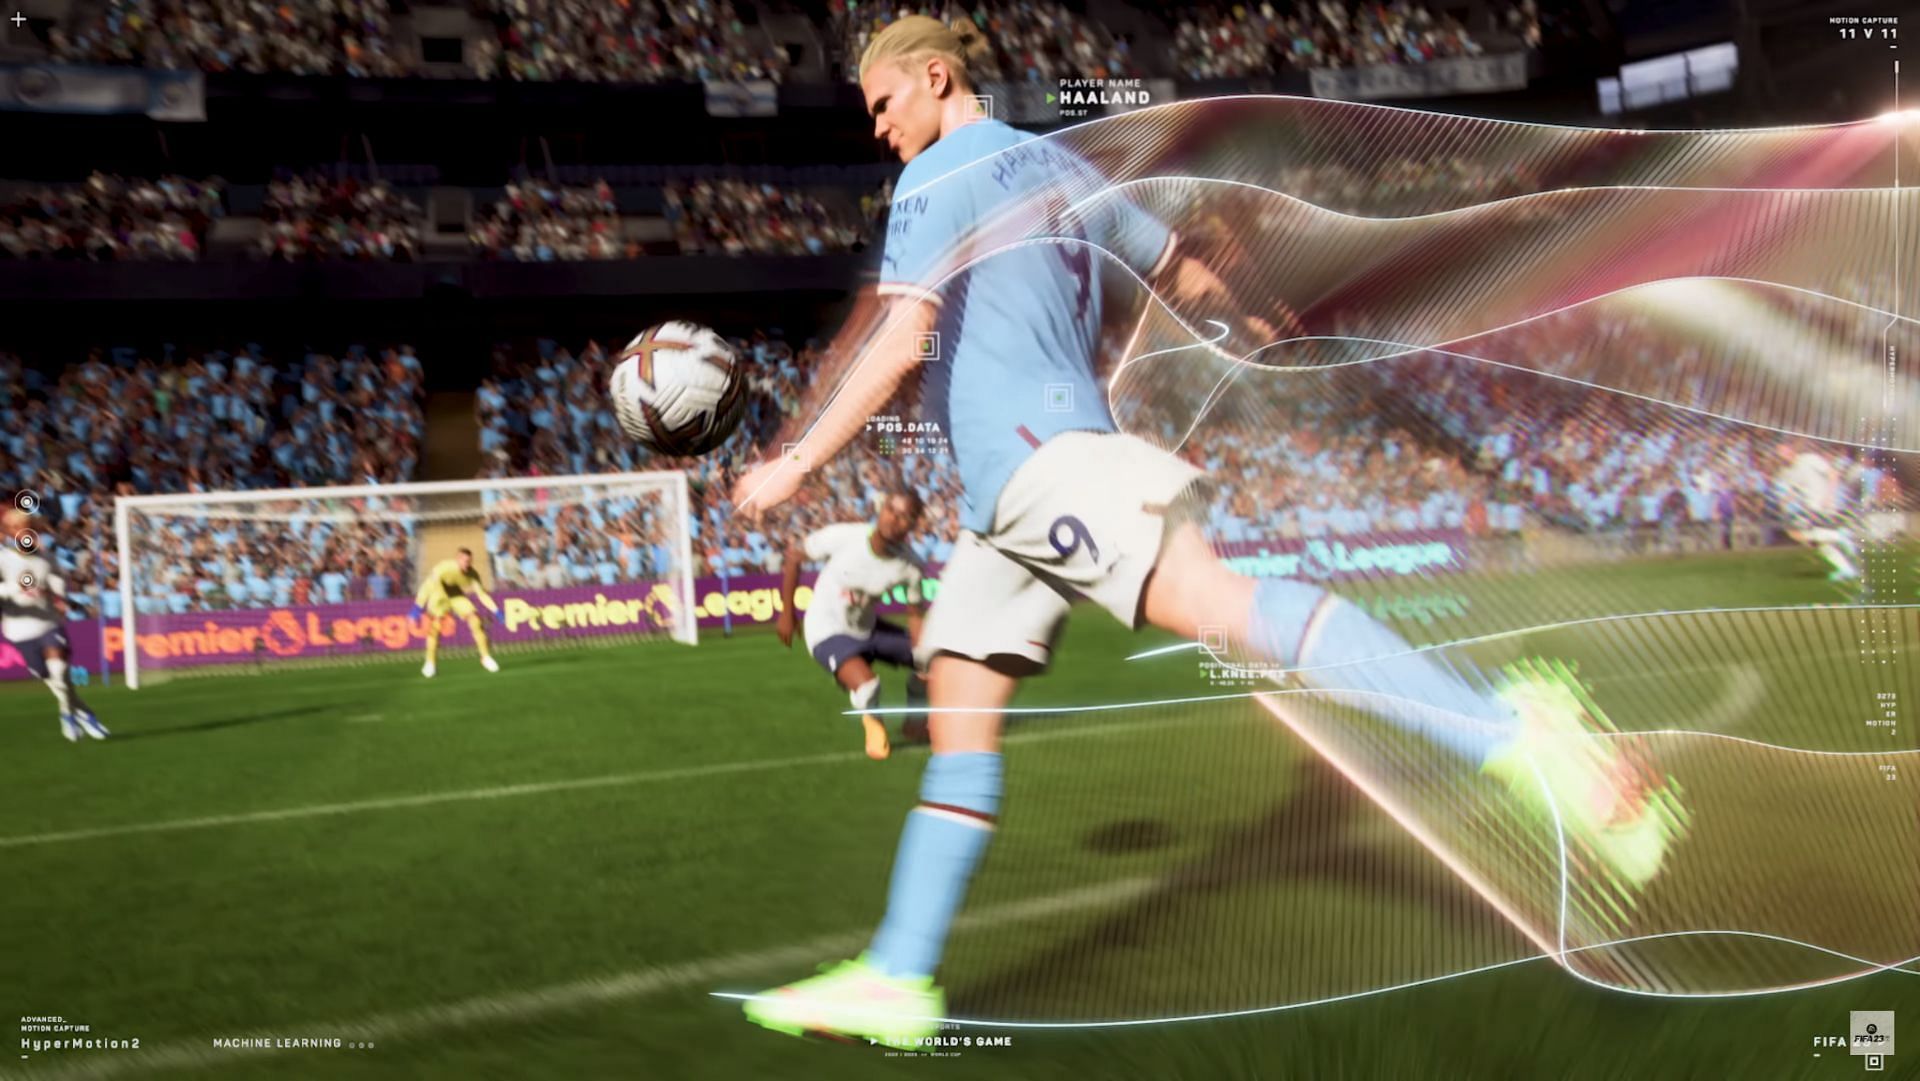 Is FIFA 23 Crossplay or Cross-Platform? - GamerSaloon Blog